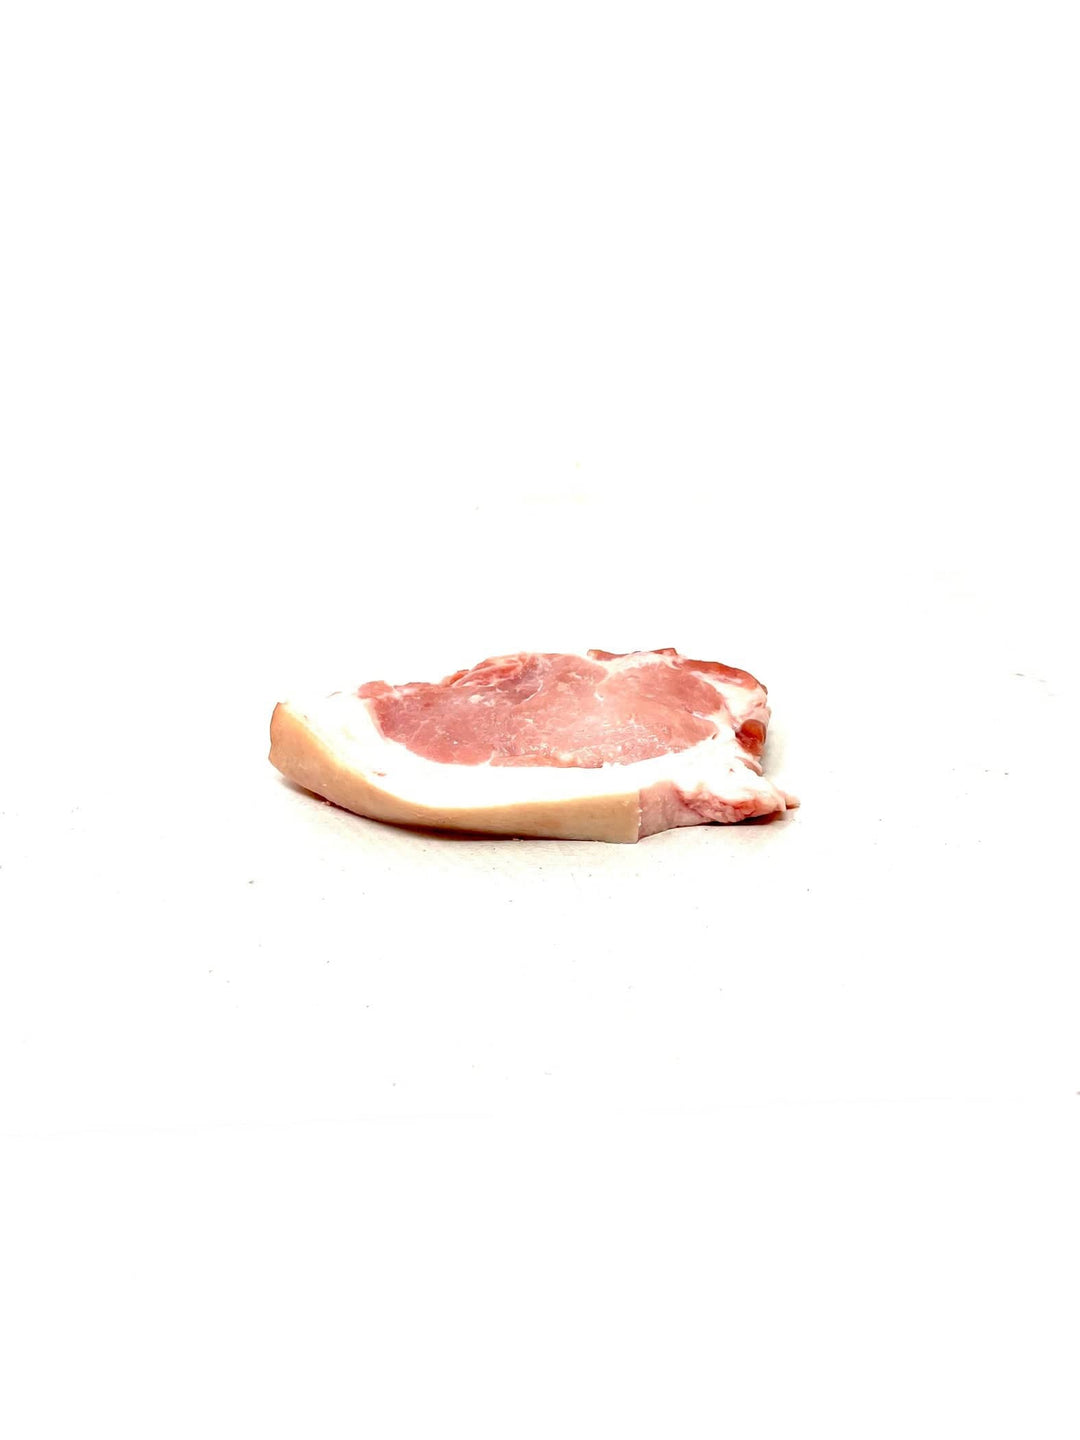 Duroc Prime Pork Chops with skin